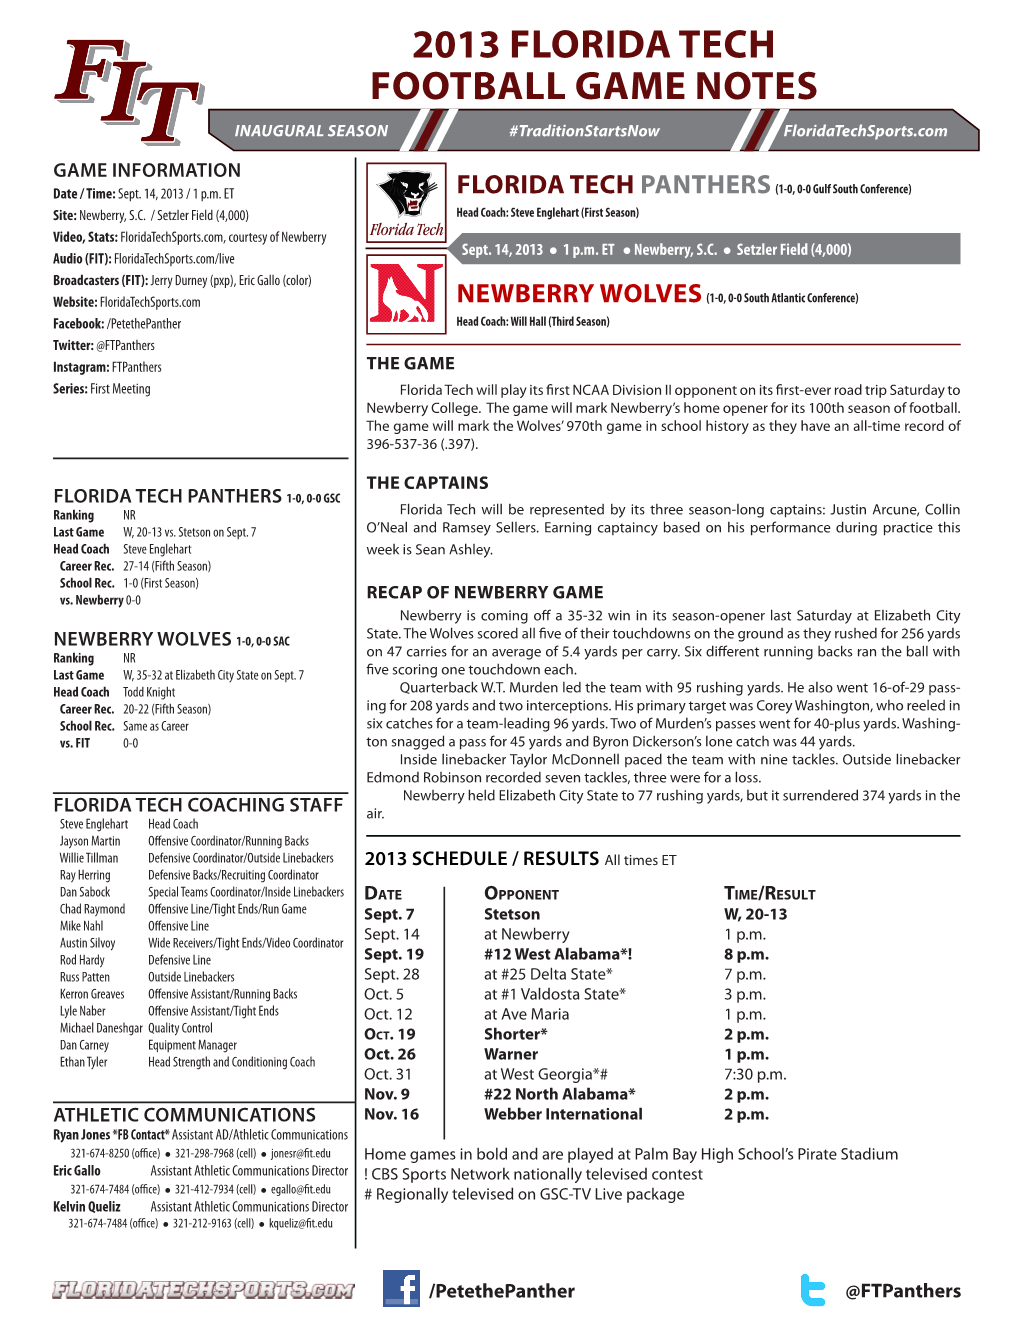 2013 Florida Tech Football Game Notes INAUGURAL SEASON #Traditionstartsnow Floridatechsports.Com